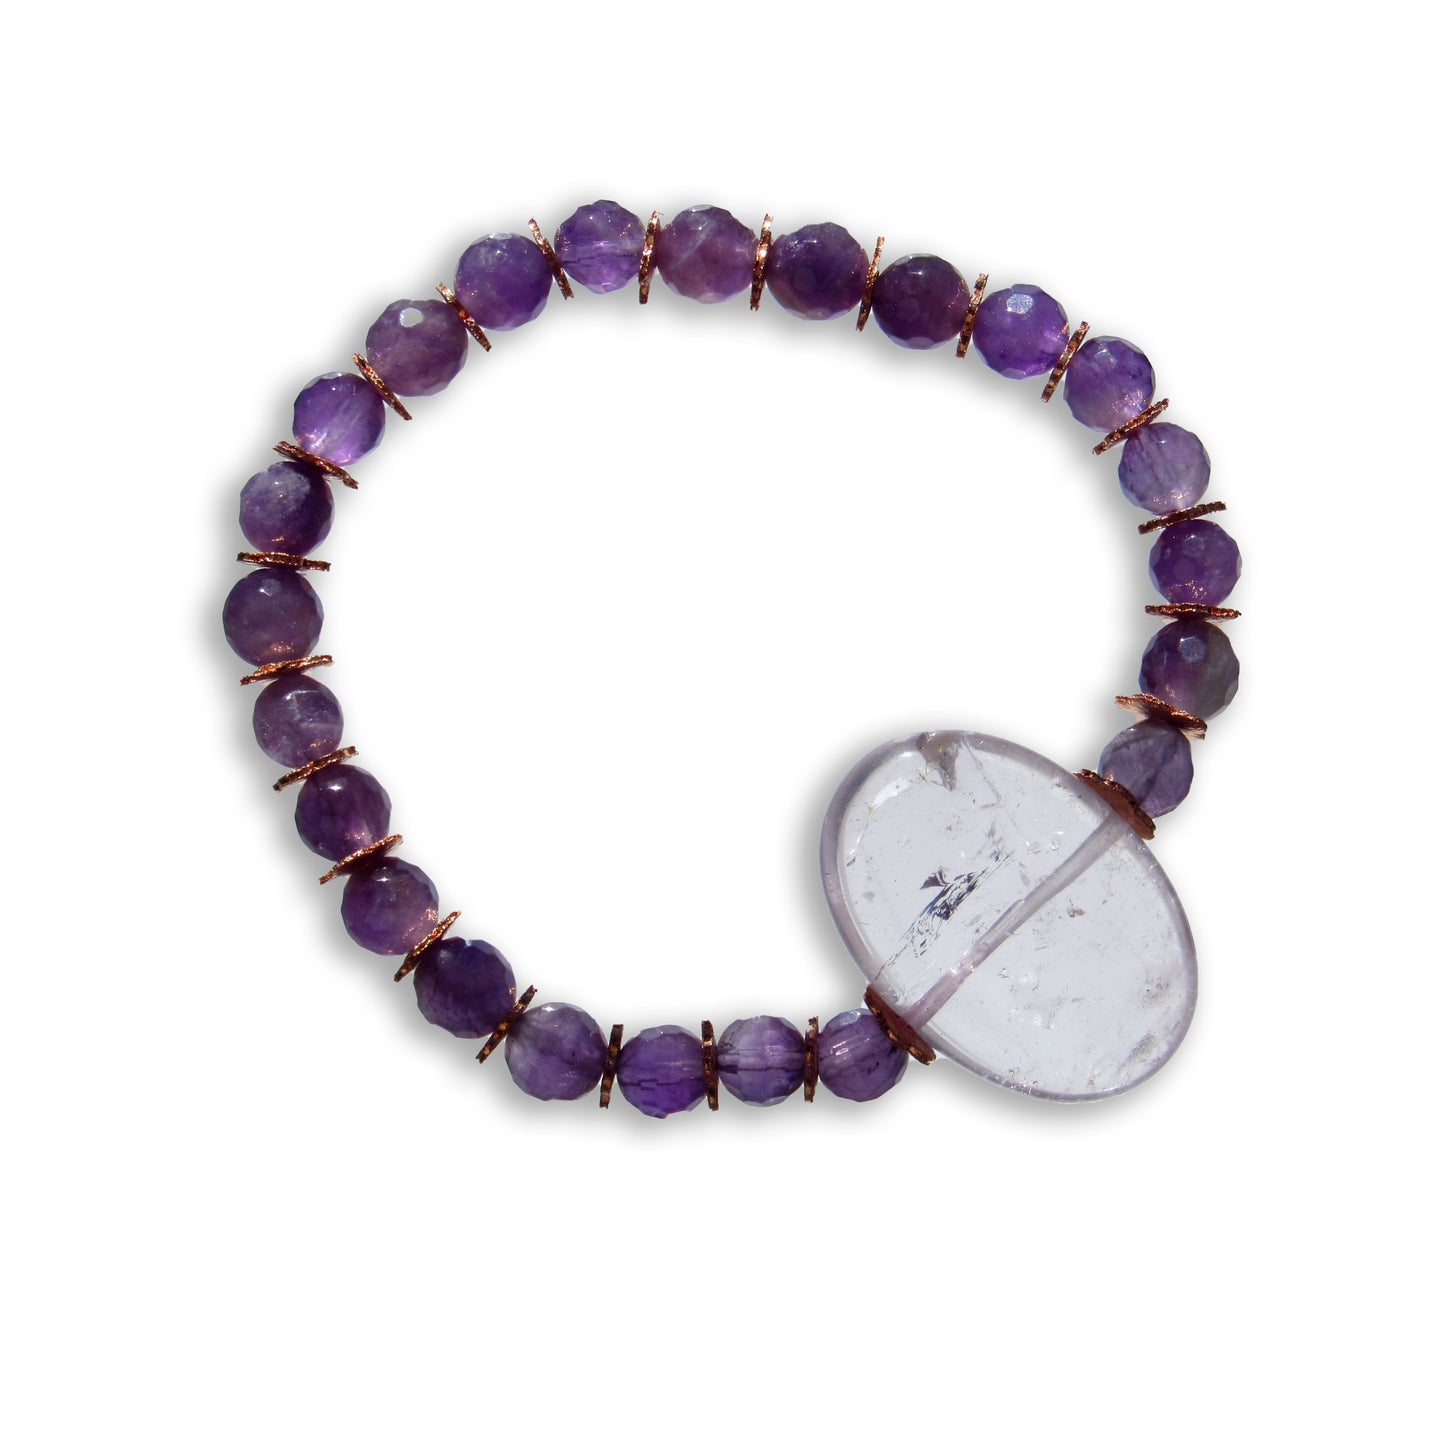 Amethyst gemstone and copper crystal beaded stretch bracelet